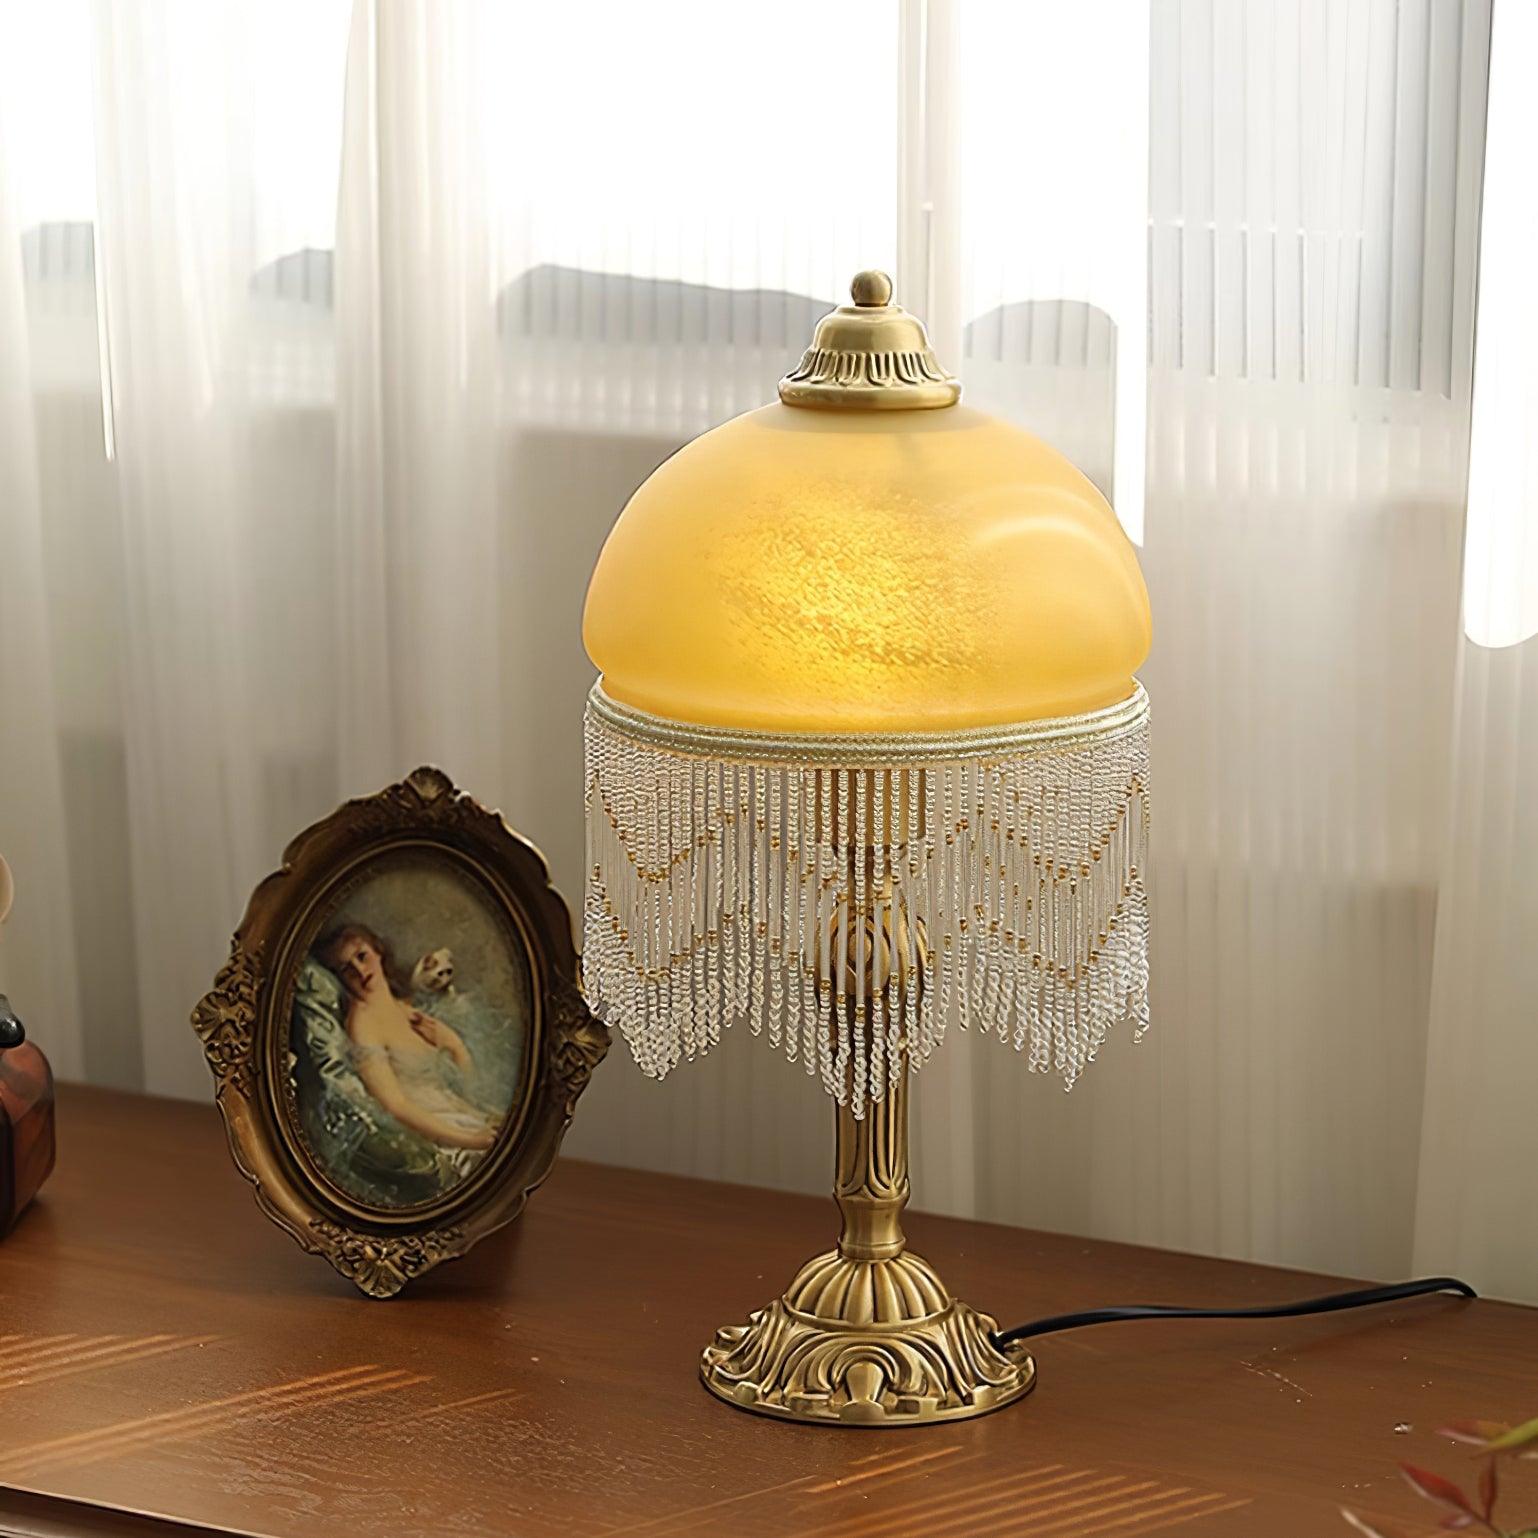 Timeless Charm Illuminated: The Enchanting World of Vintage Desk Lamps